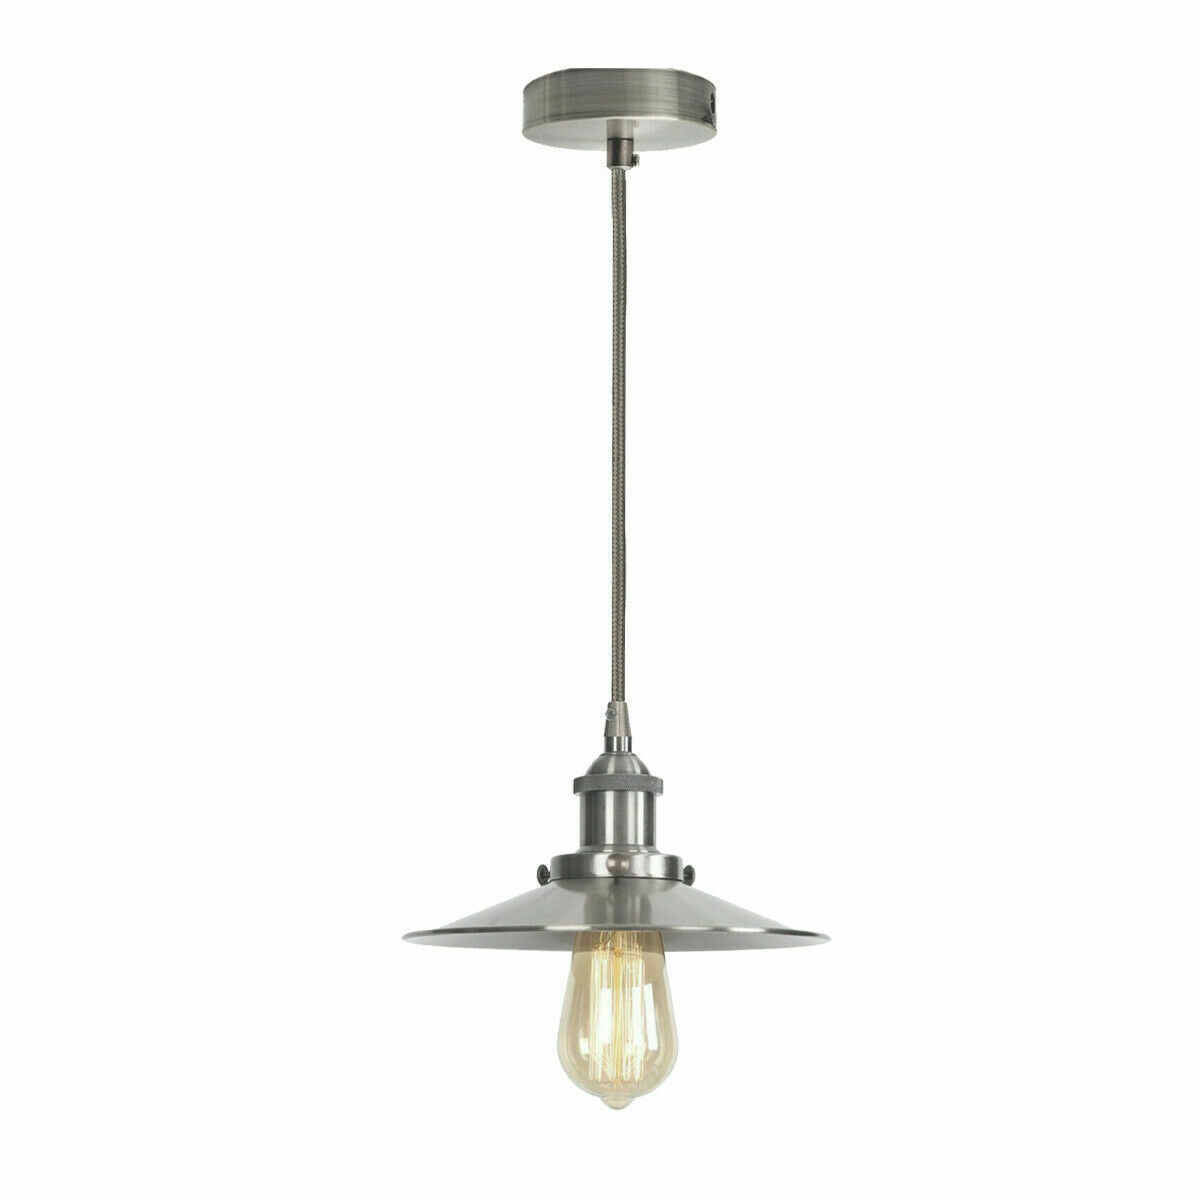 Vintage Industrial Metal Ceiling Pendant Light Shade Modern Hanging Retro Light~2166 - LEDSone UK Ltd